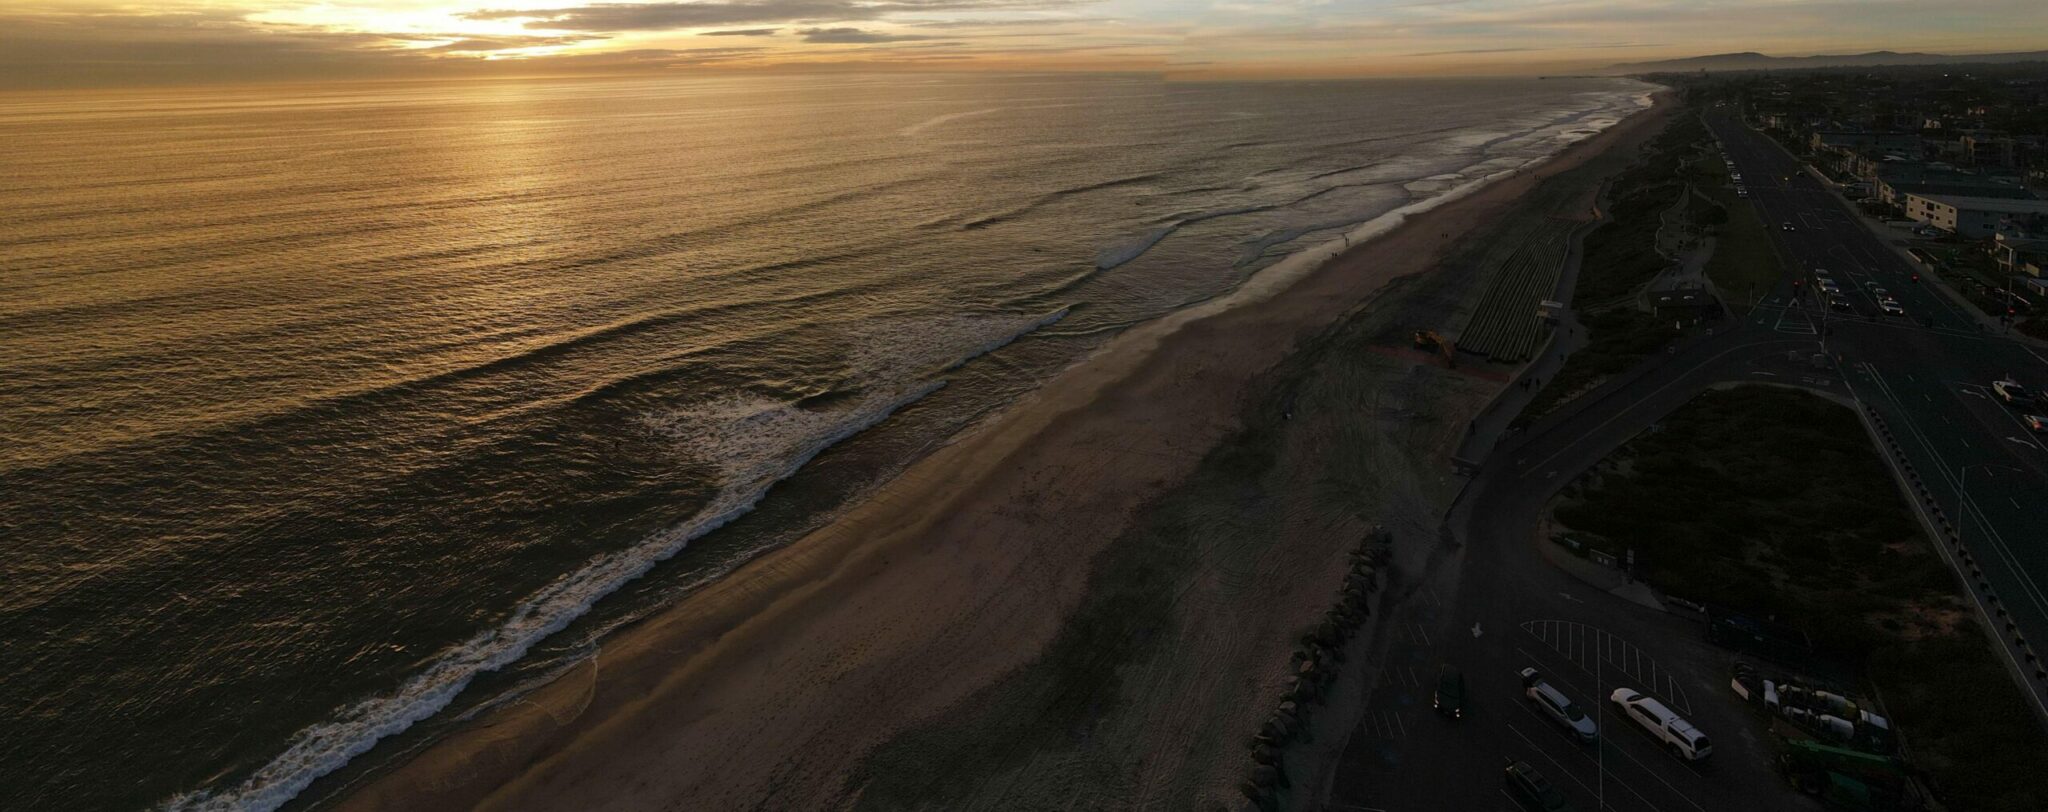 Aerial view of the beach shoreline in Oceanside, California